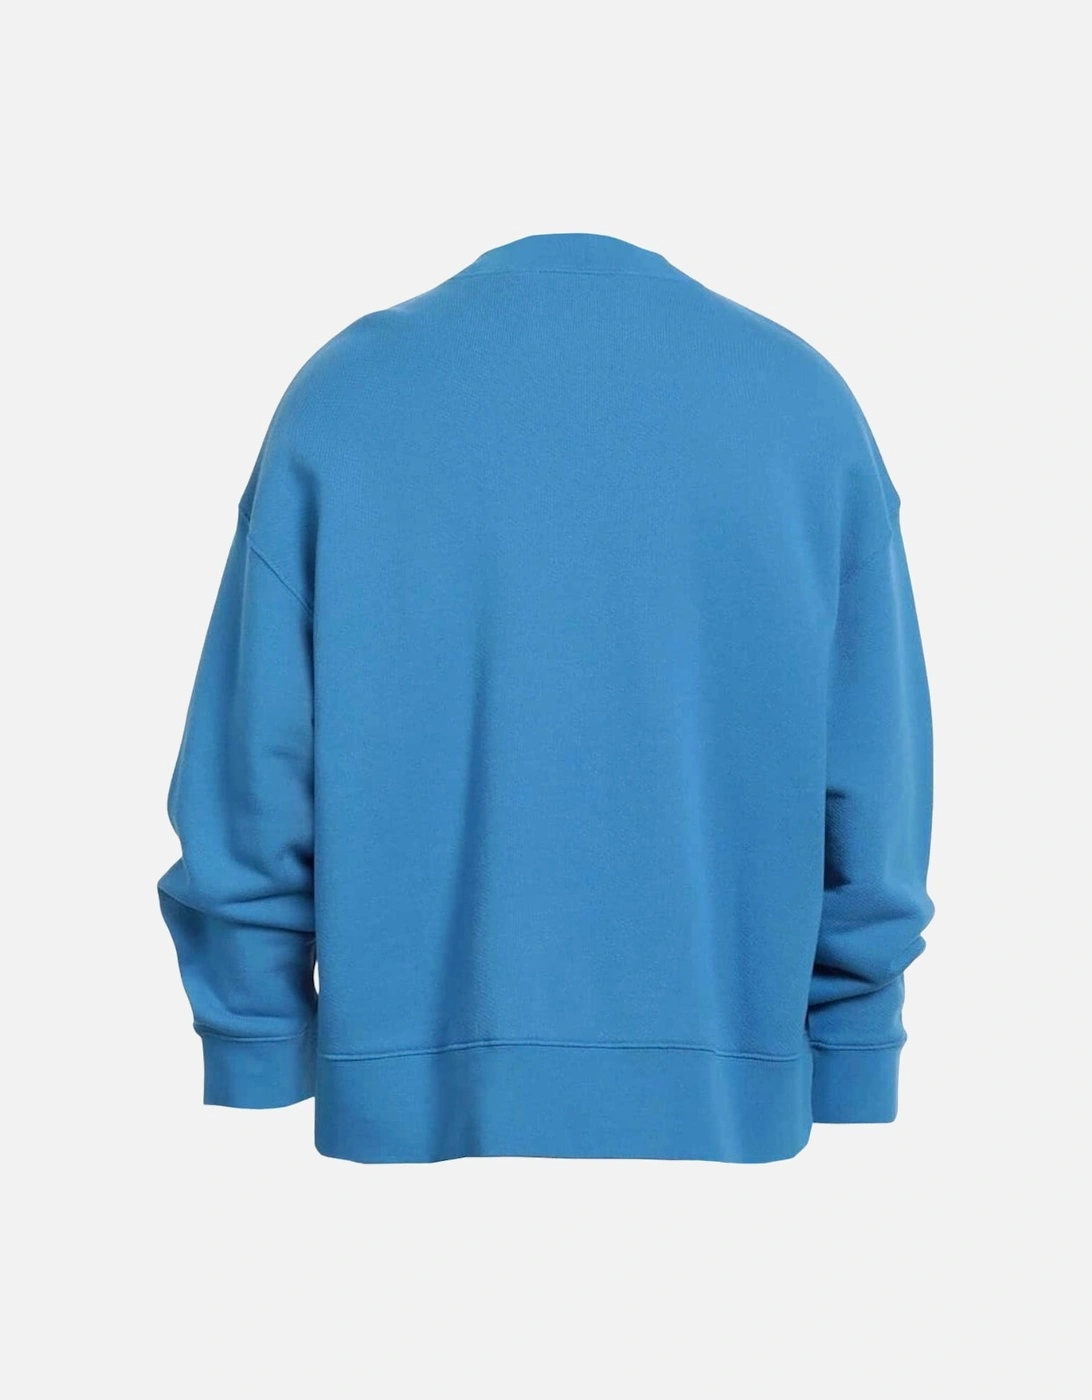 PXP Palm Crew Blue Sweatshirt